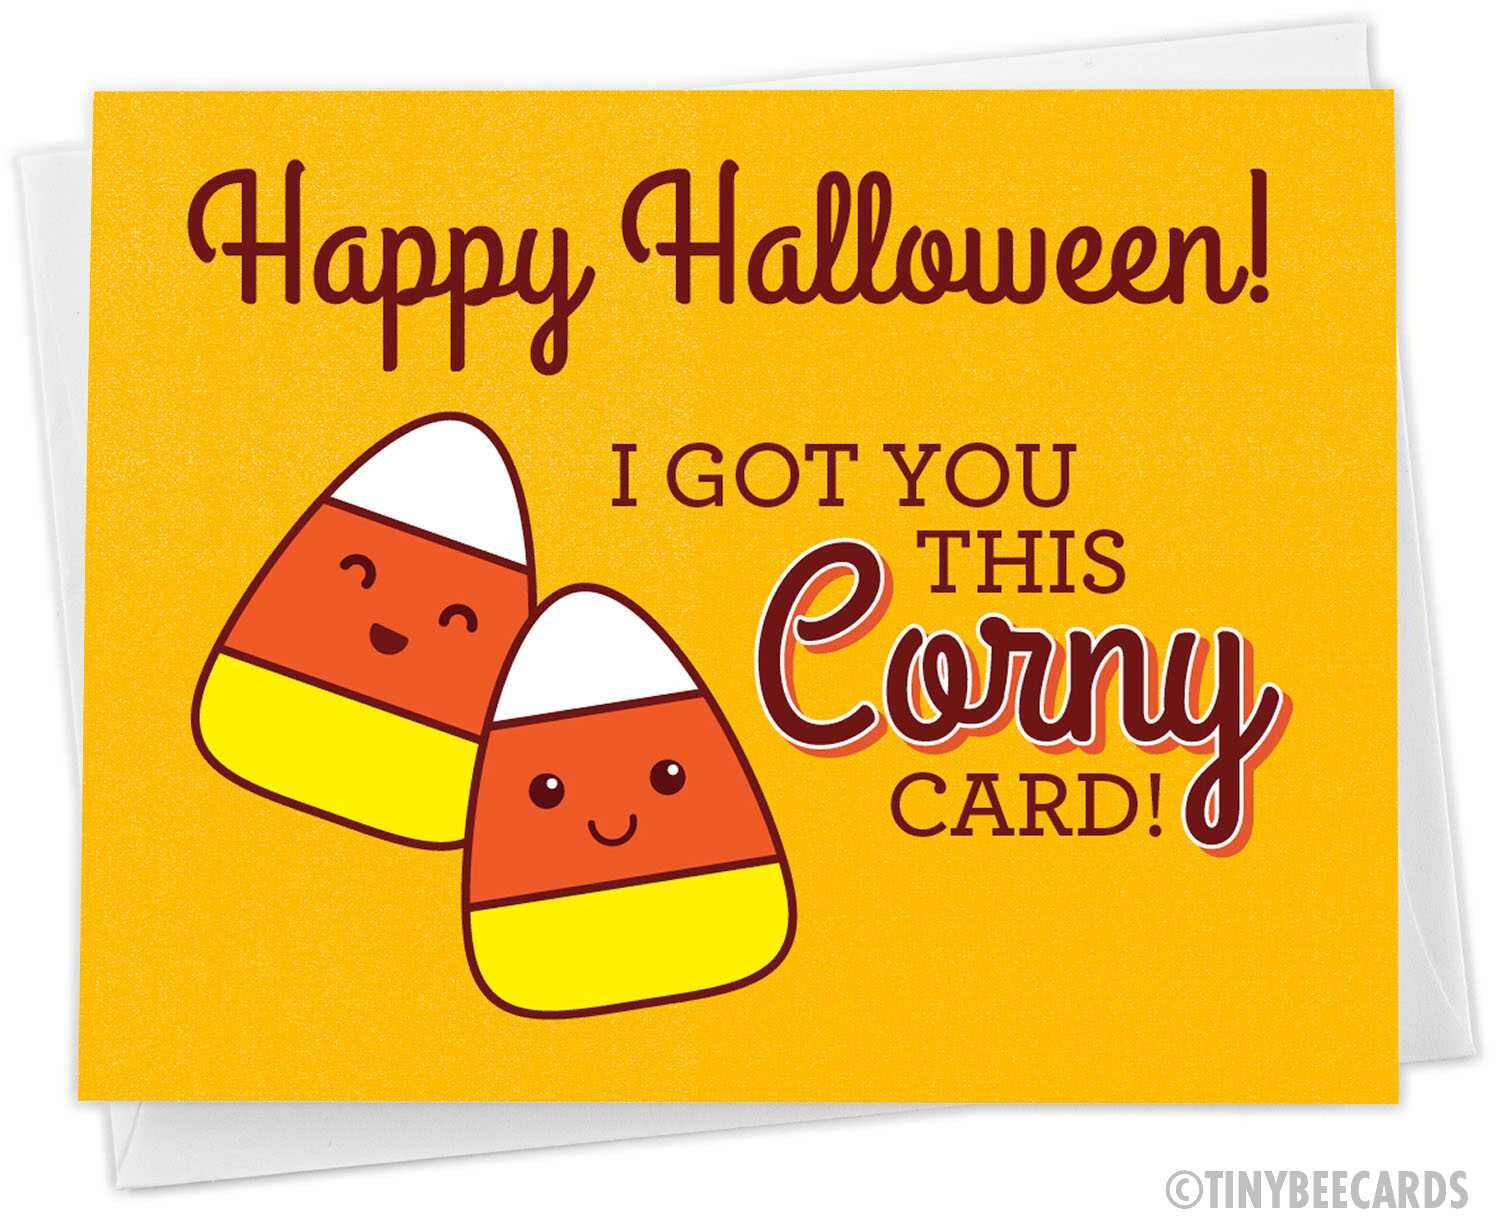 Funny Halloween Card Candy Corn Pun Got You This Corny Etsy